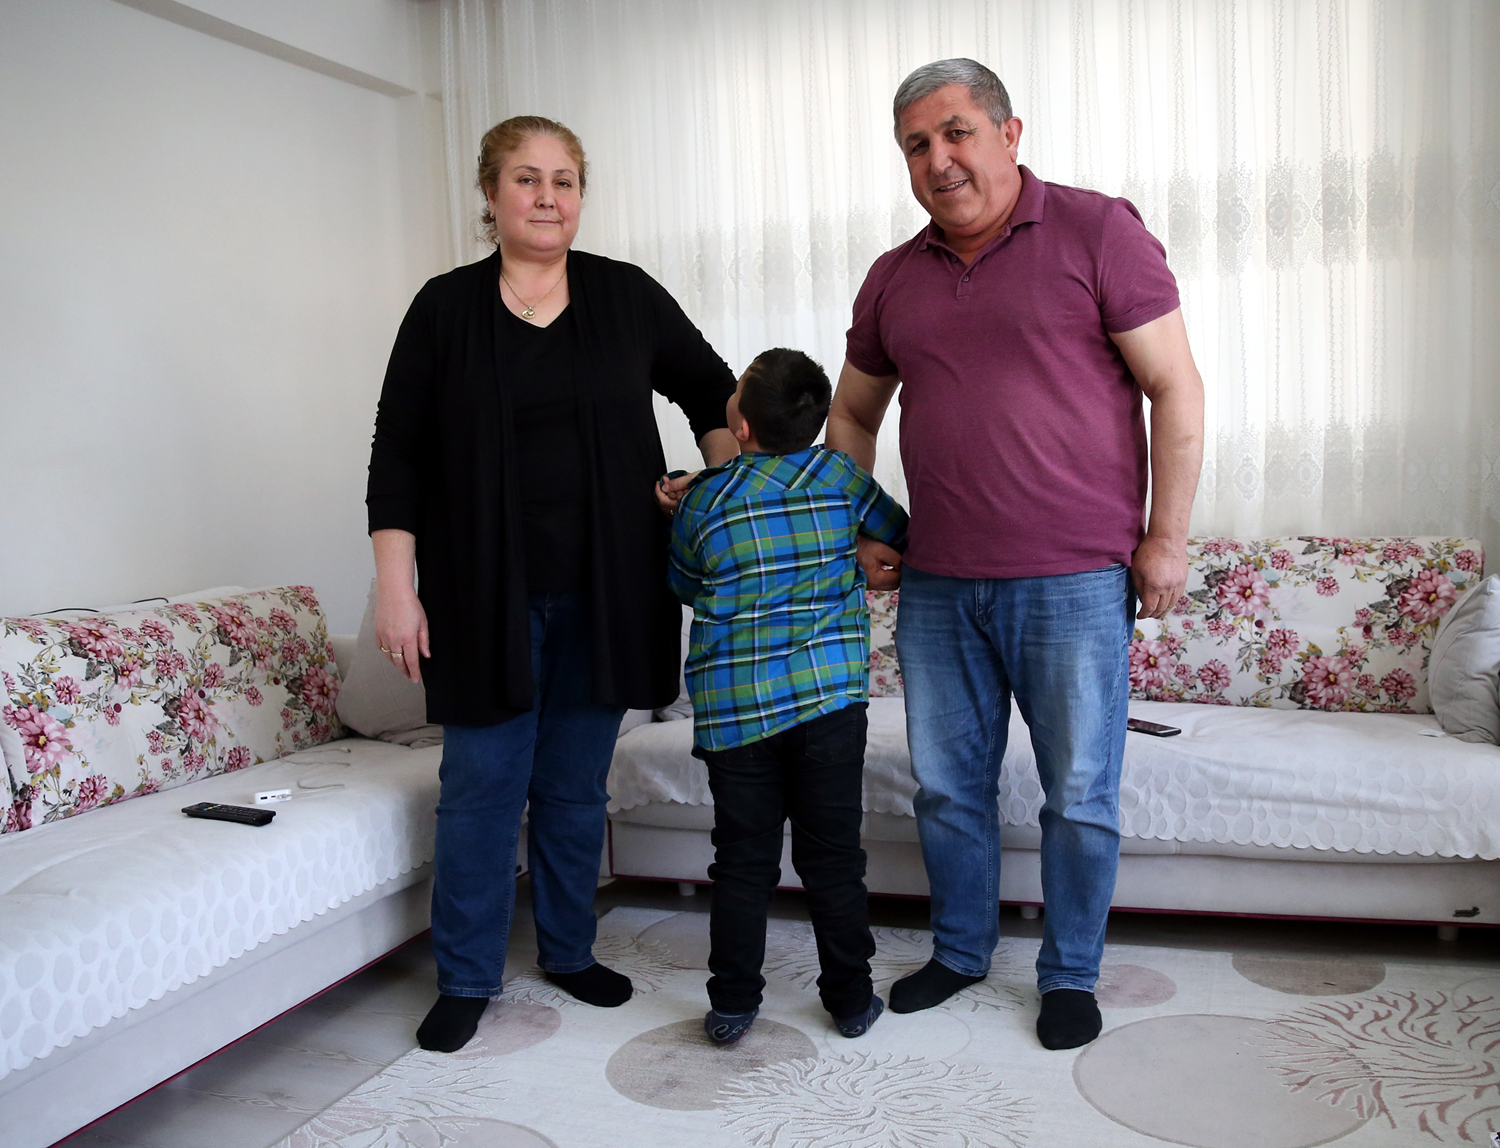 Anne babasnn hastanede terk ettikleri down sendromlu Berat'n 'koruyucu ailesi' halas oldu